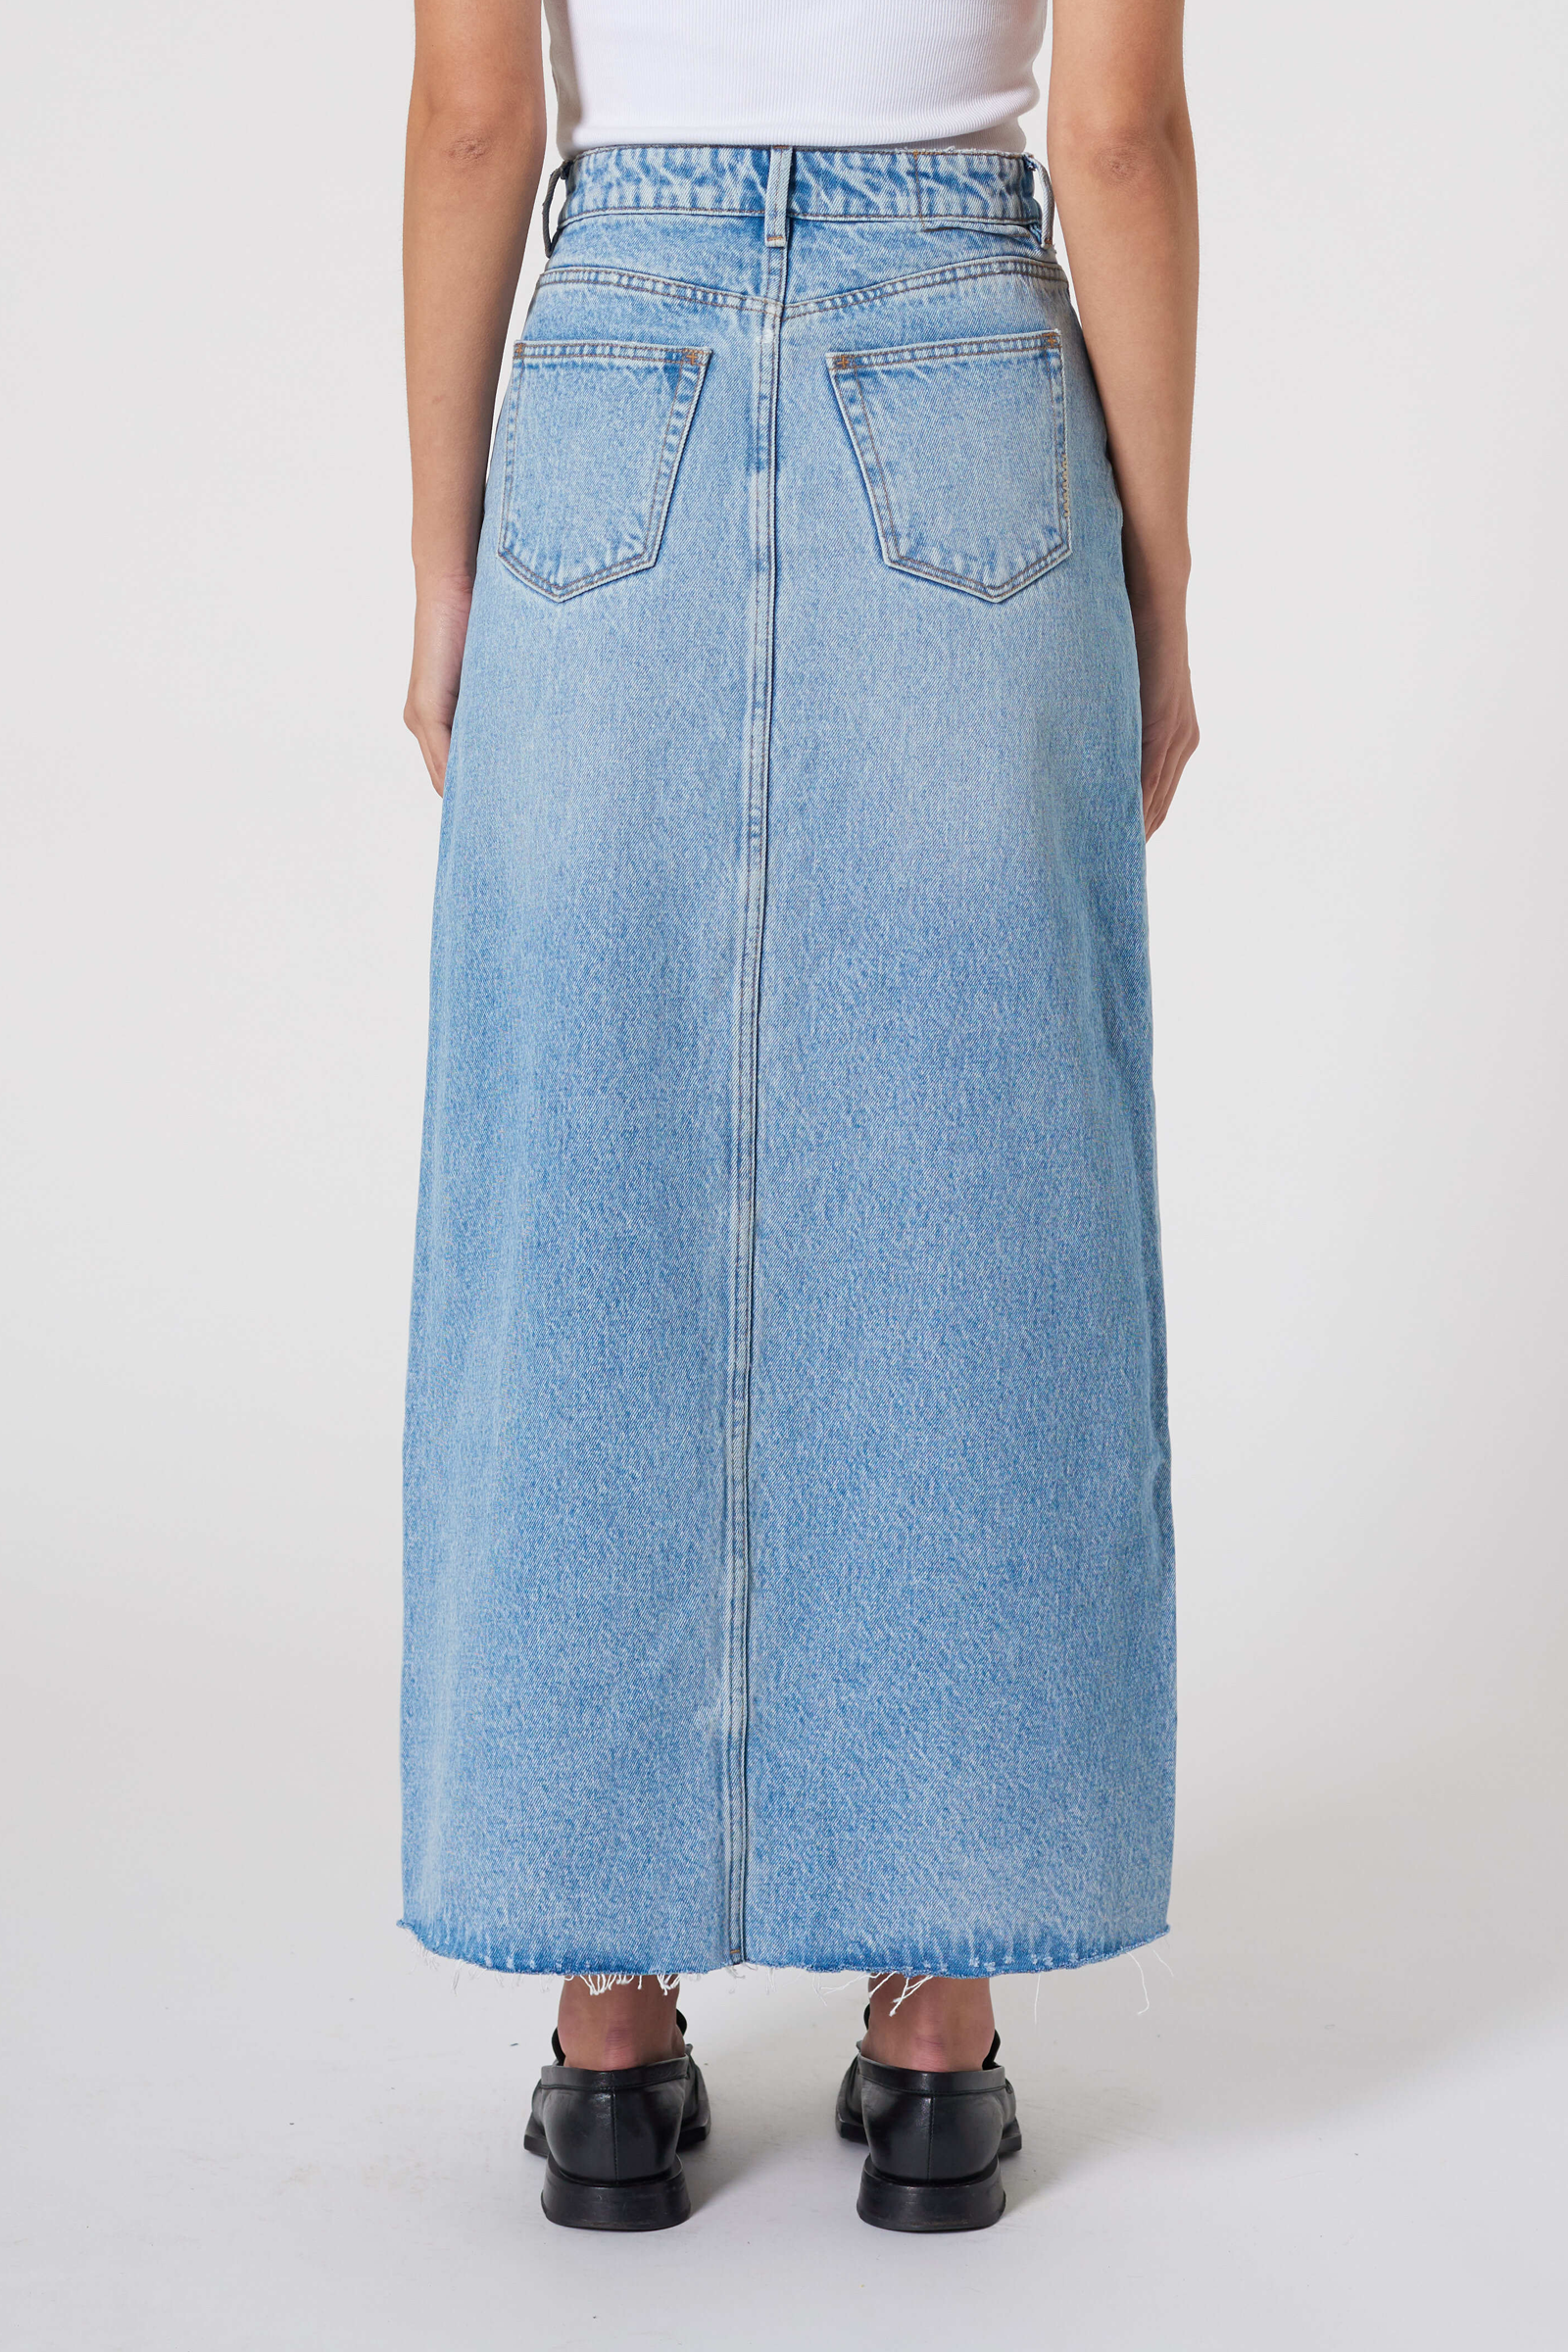 Darcy Maxi Skirt - Jemima Neuw maxi blue womens-skirts 